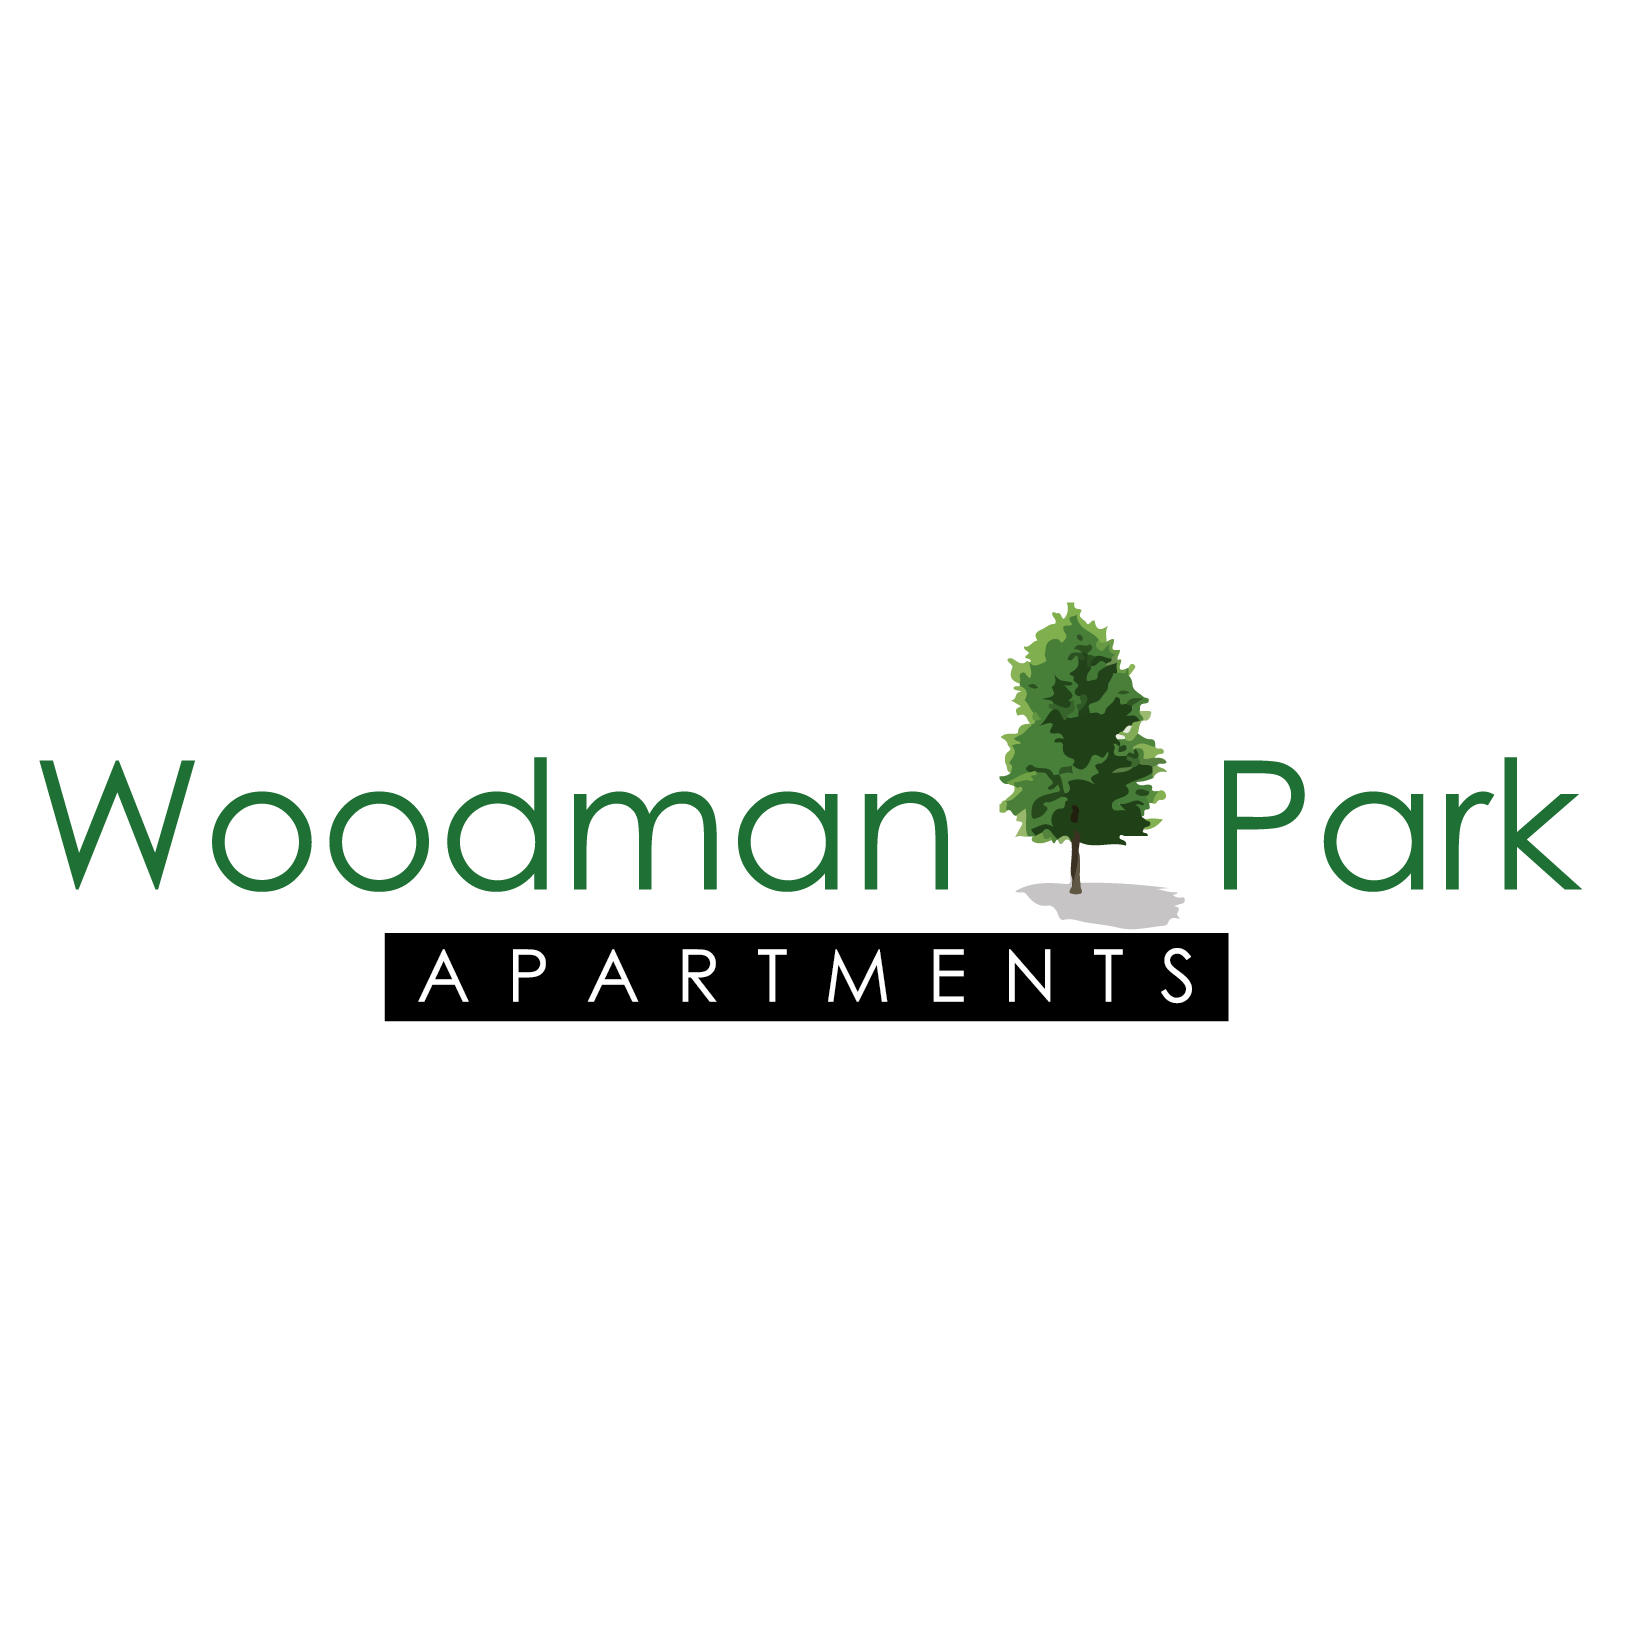 Woodman Park Apartments